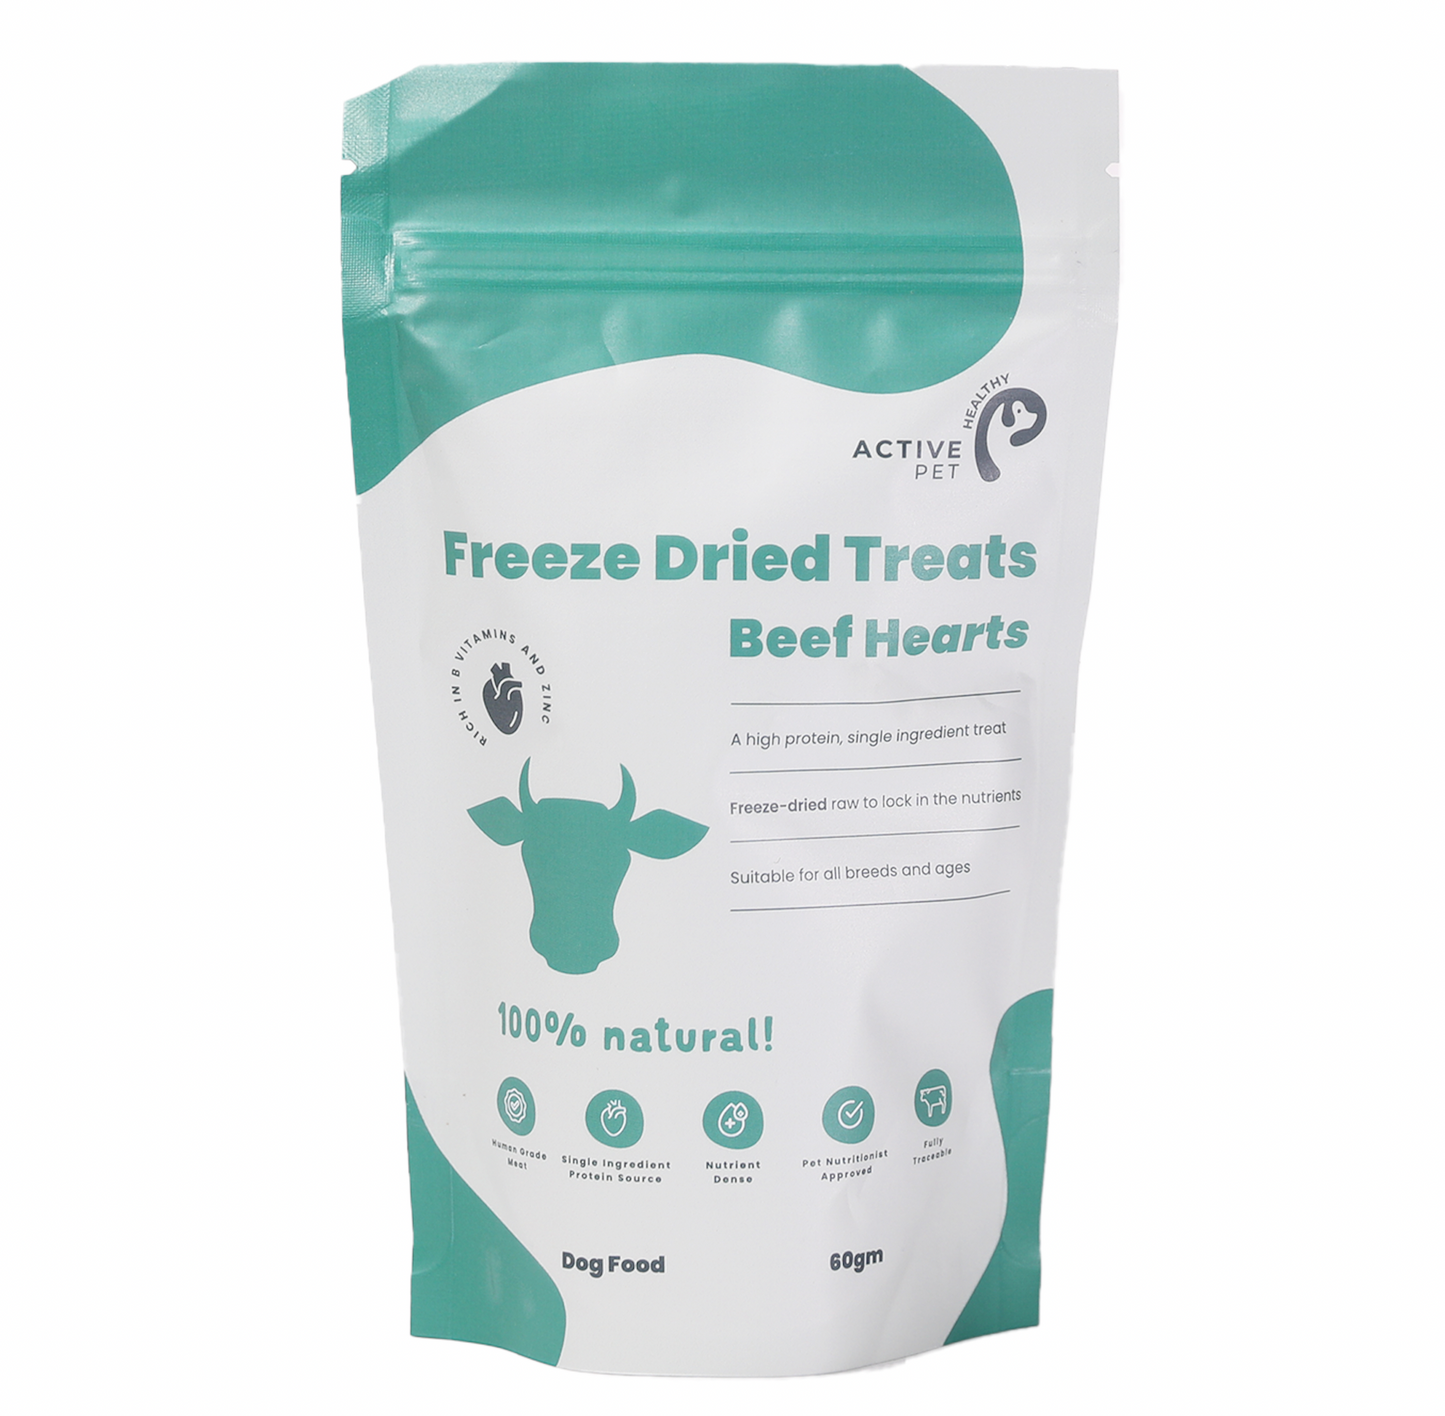 Buy 4 freeze dried treats